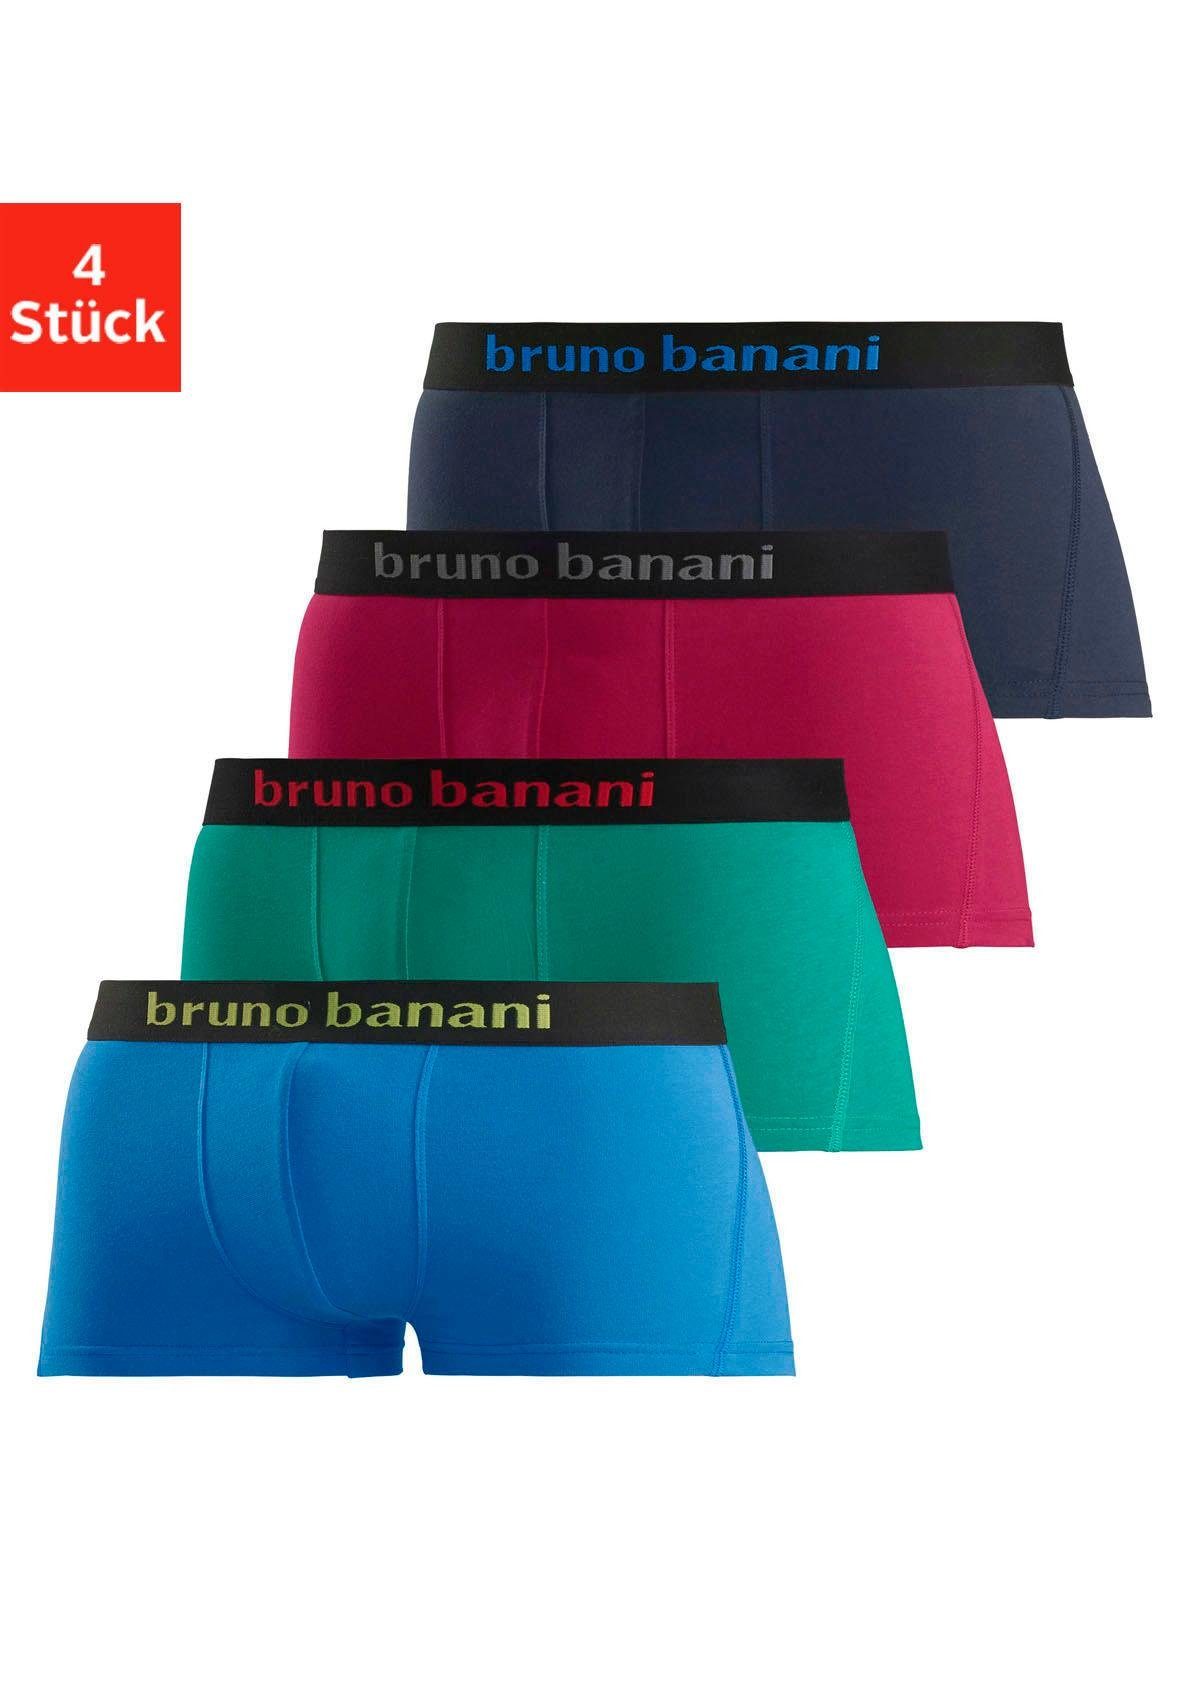 Bruno Banani Boxershorts (Packung, 4-St) in Hipster-Form mit Logo Webbund blau, grün, rot, marine